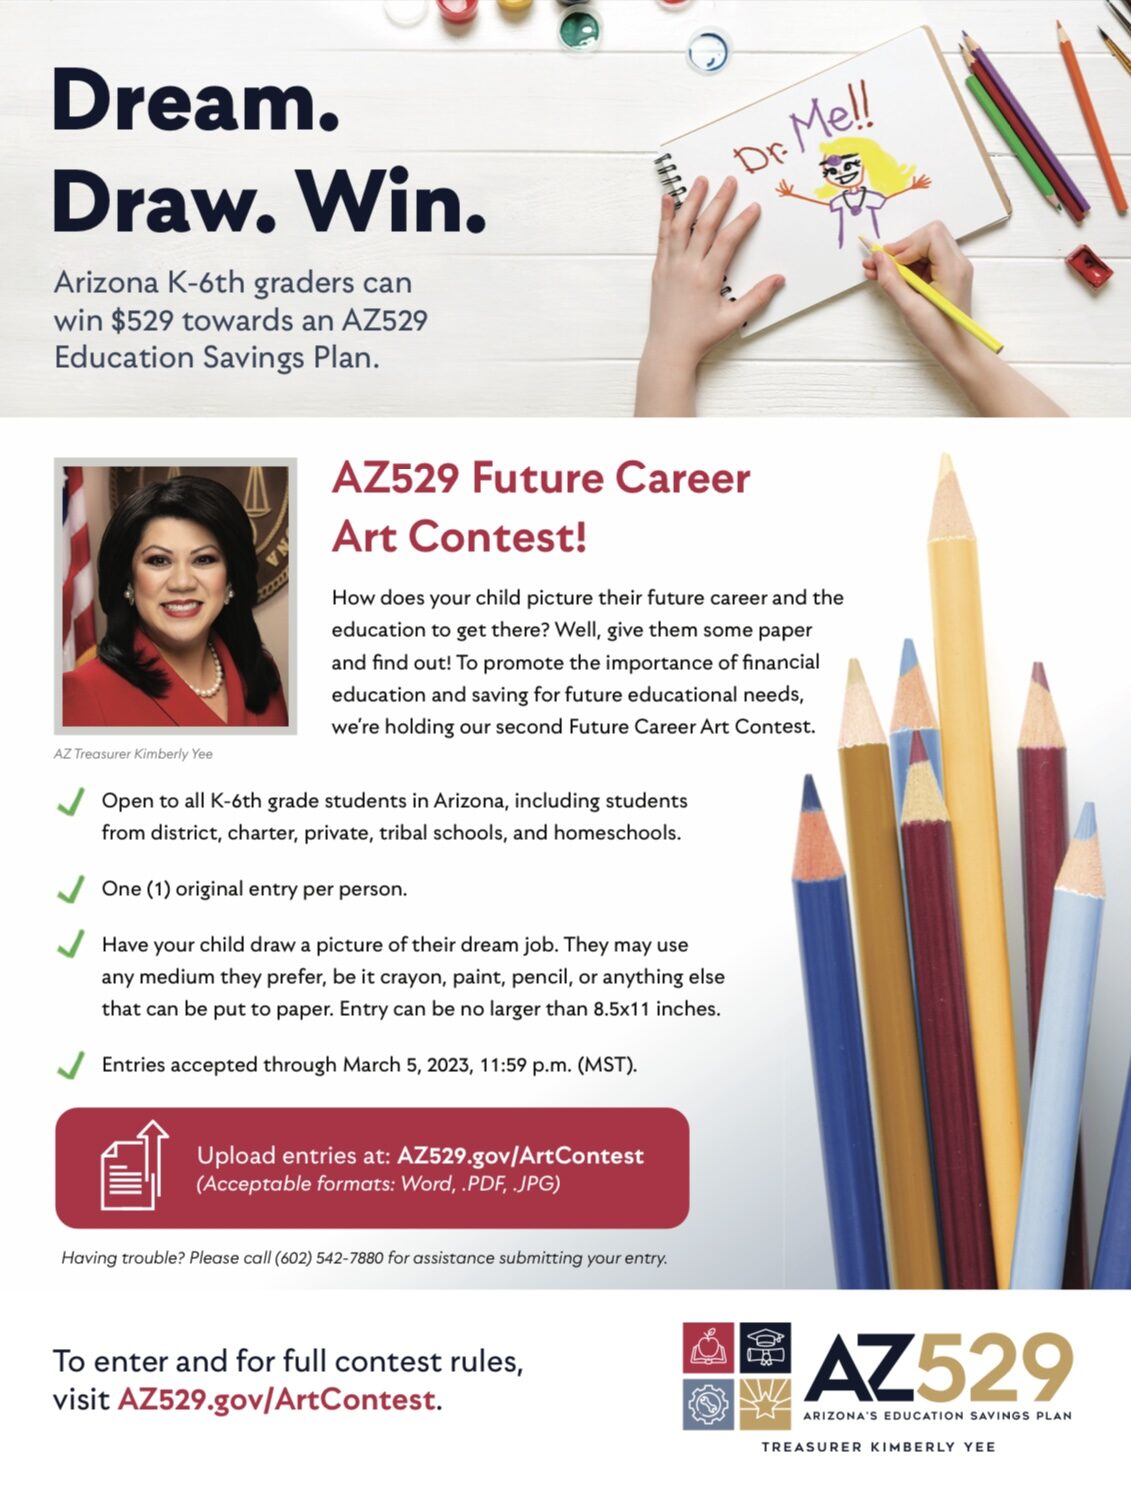 AZ529, Arizona’s Education Savings Plan Launches Statewide Future Career Art Contest